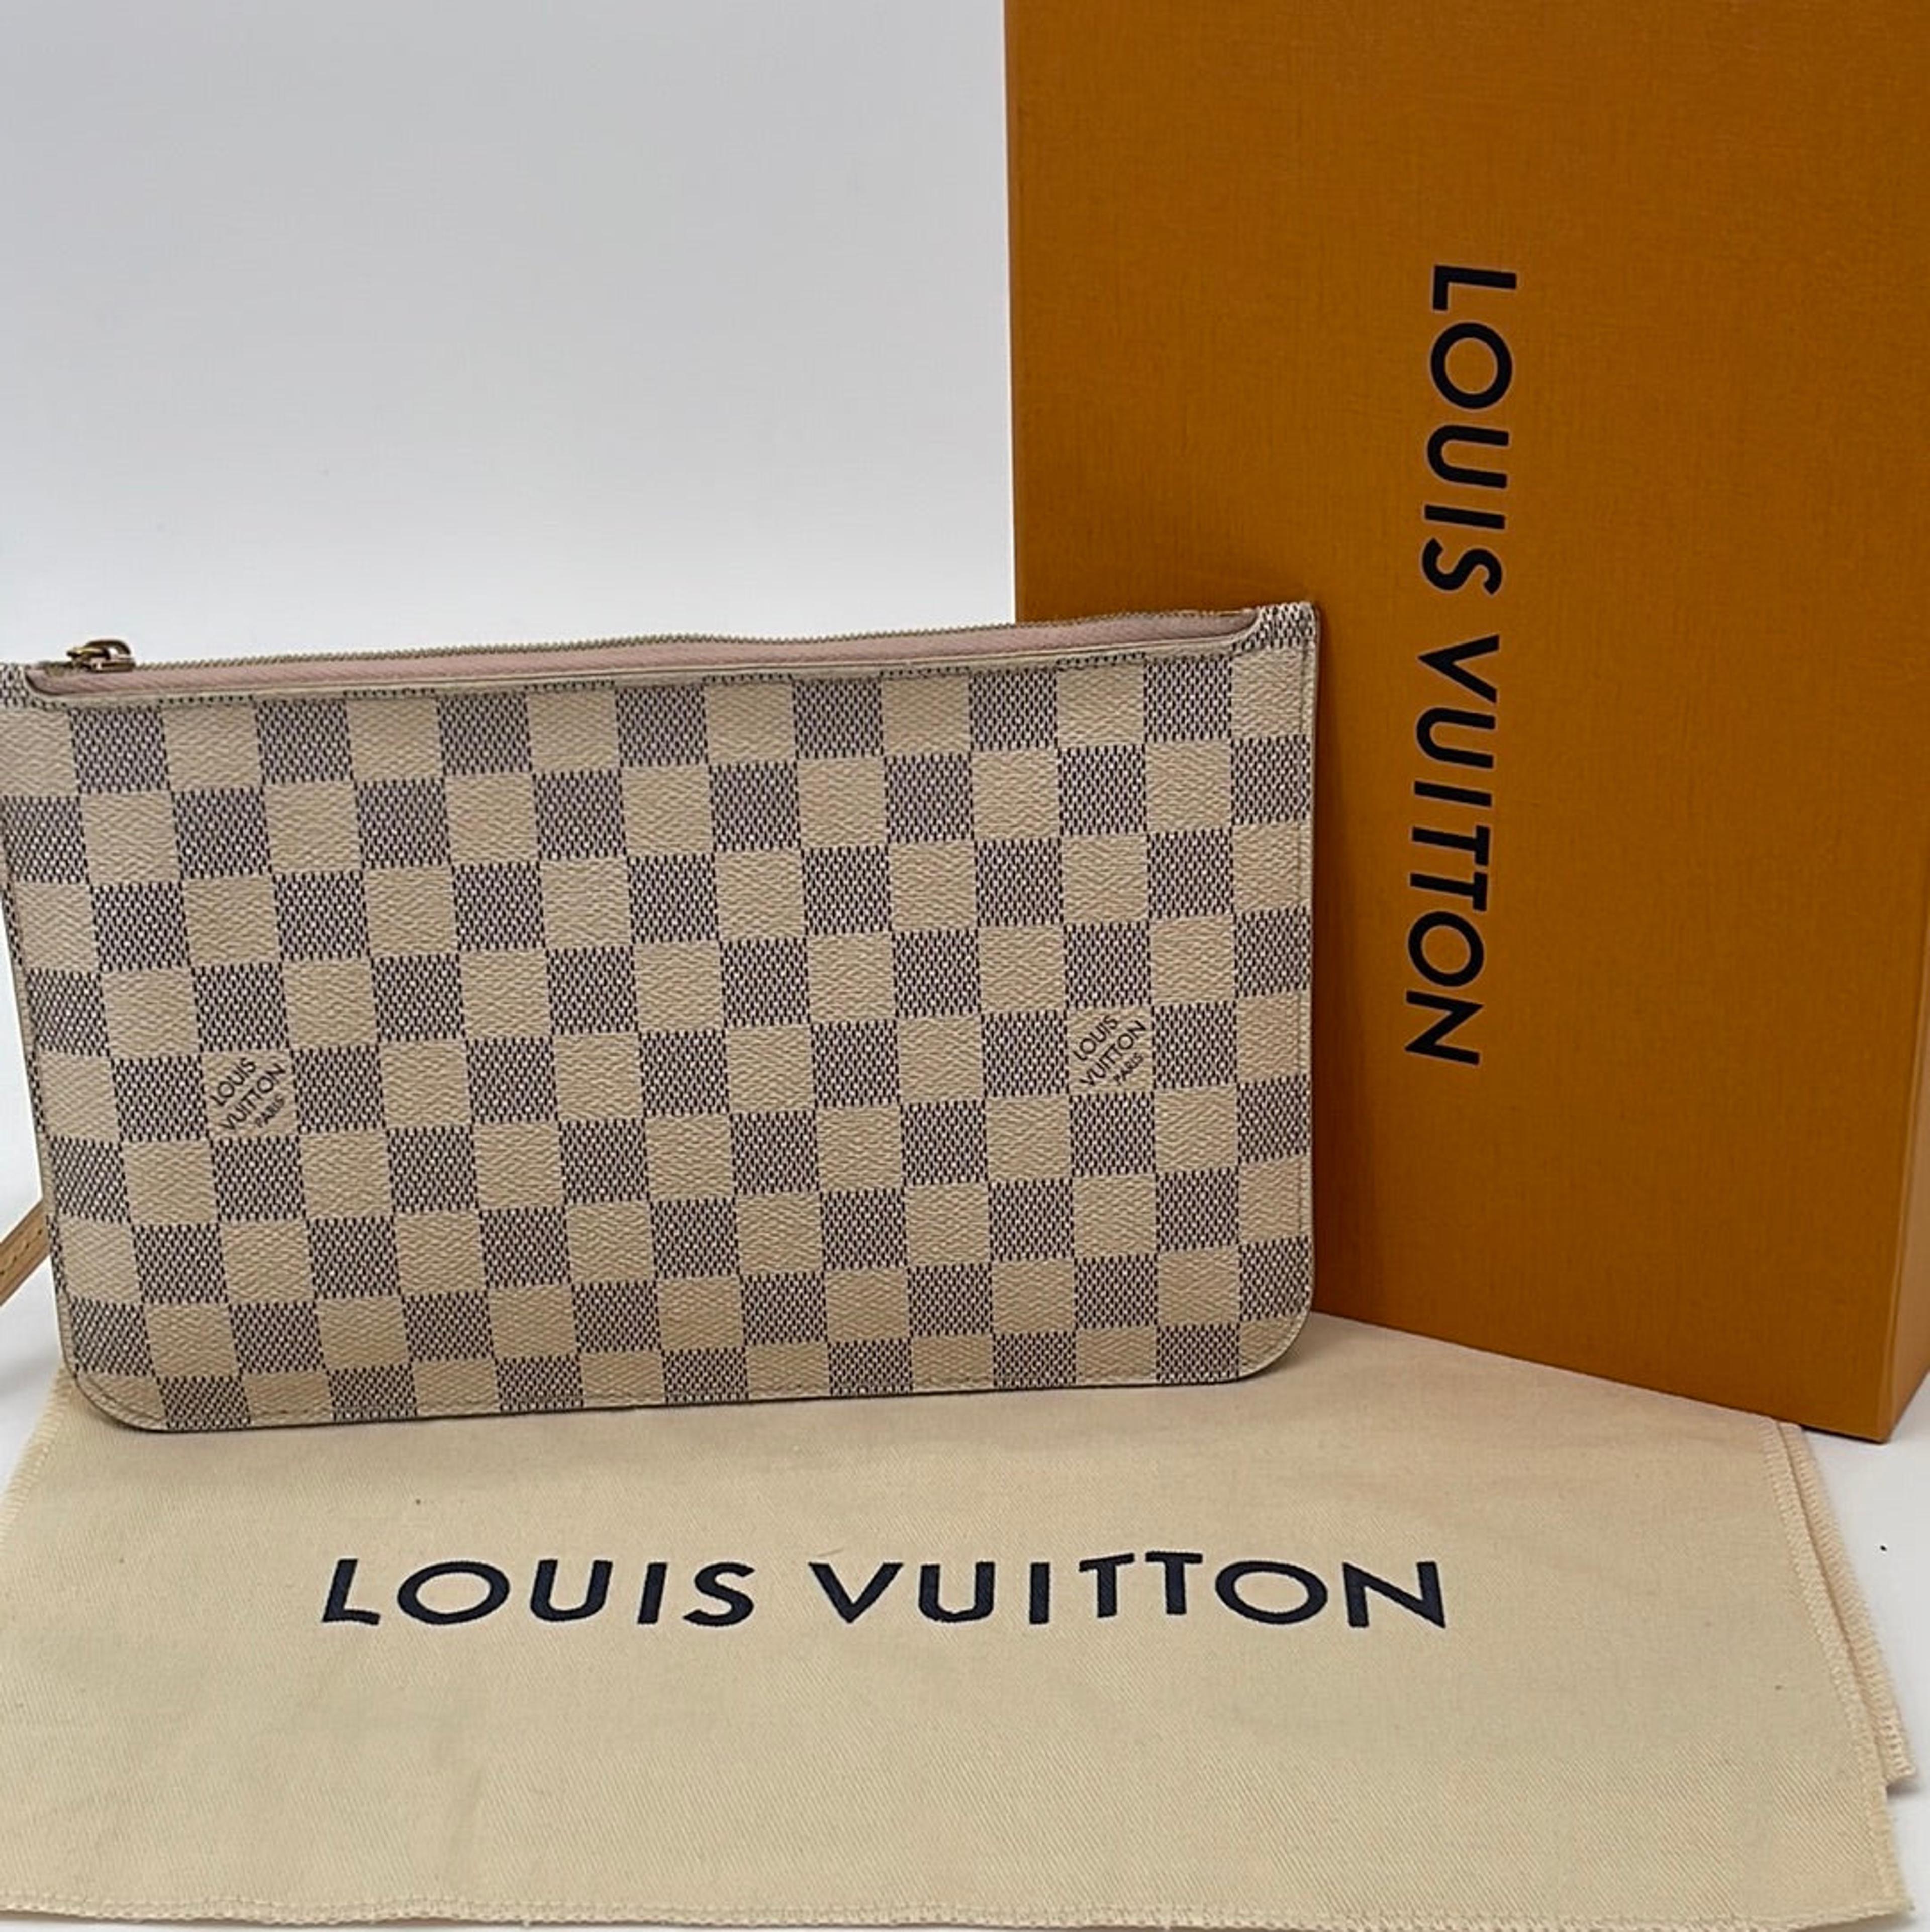 NTWRK - Preloved Louis Vuitton Damier Azur Neverfull Large Pouch